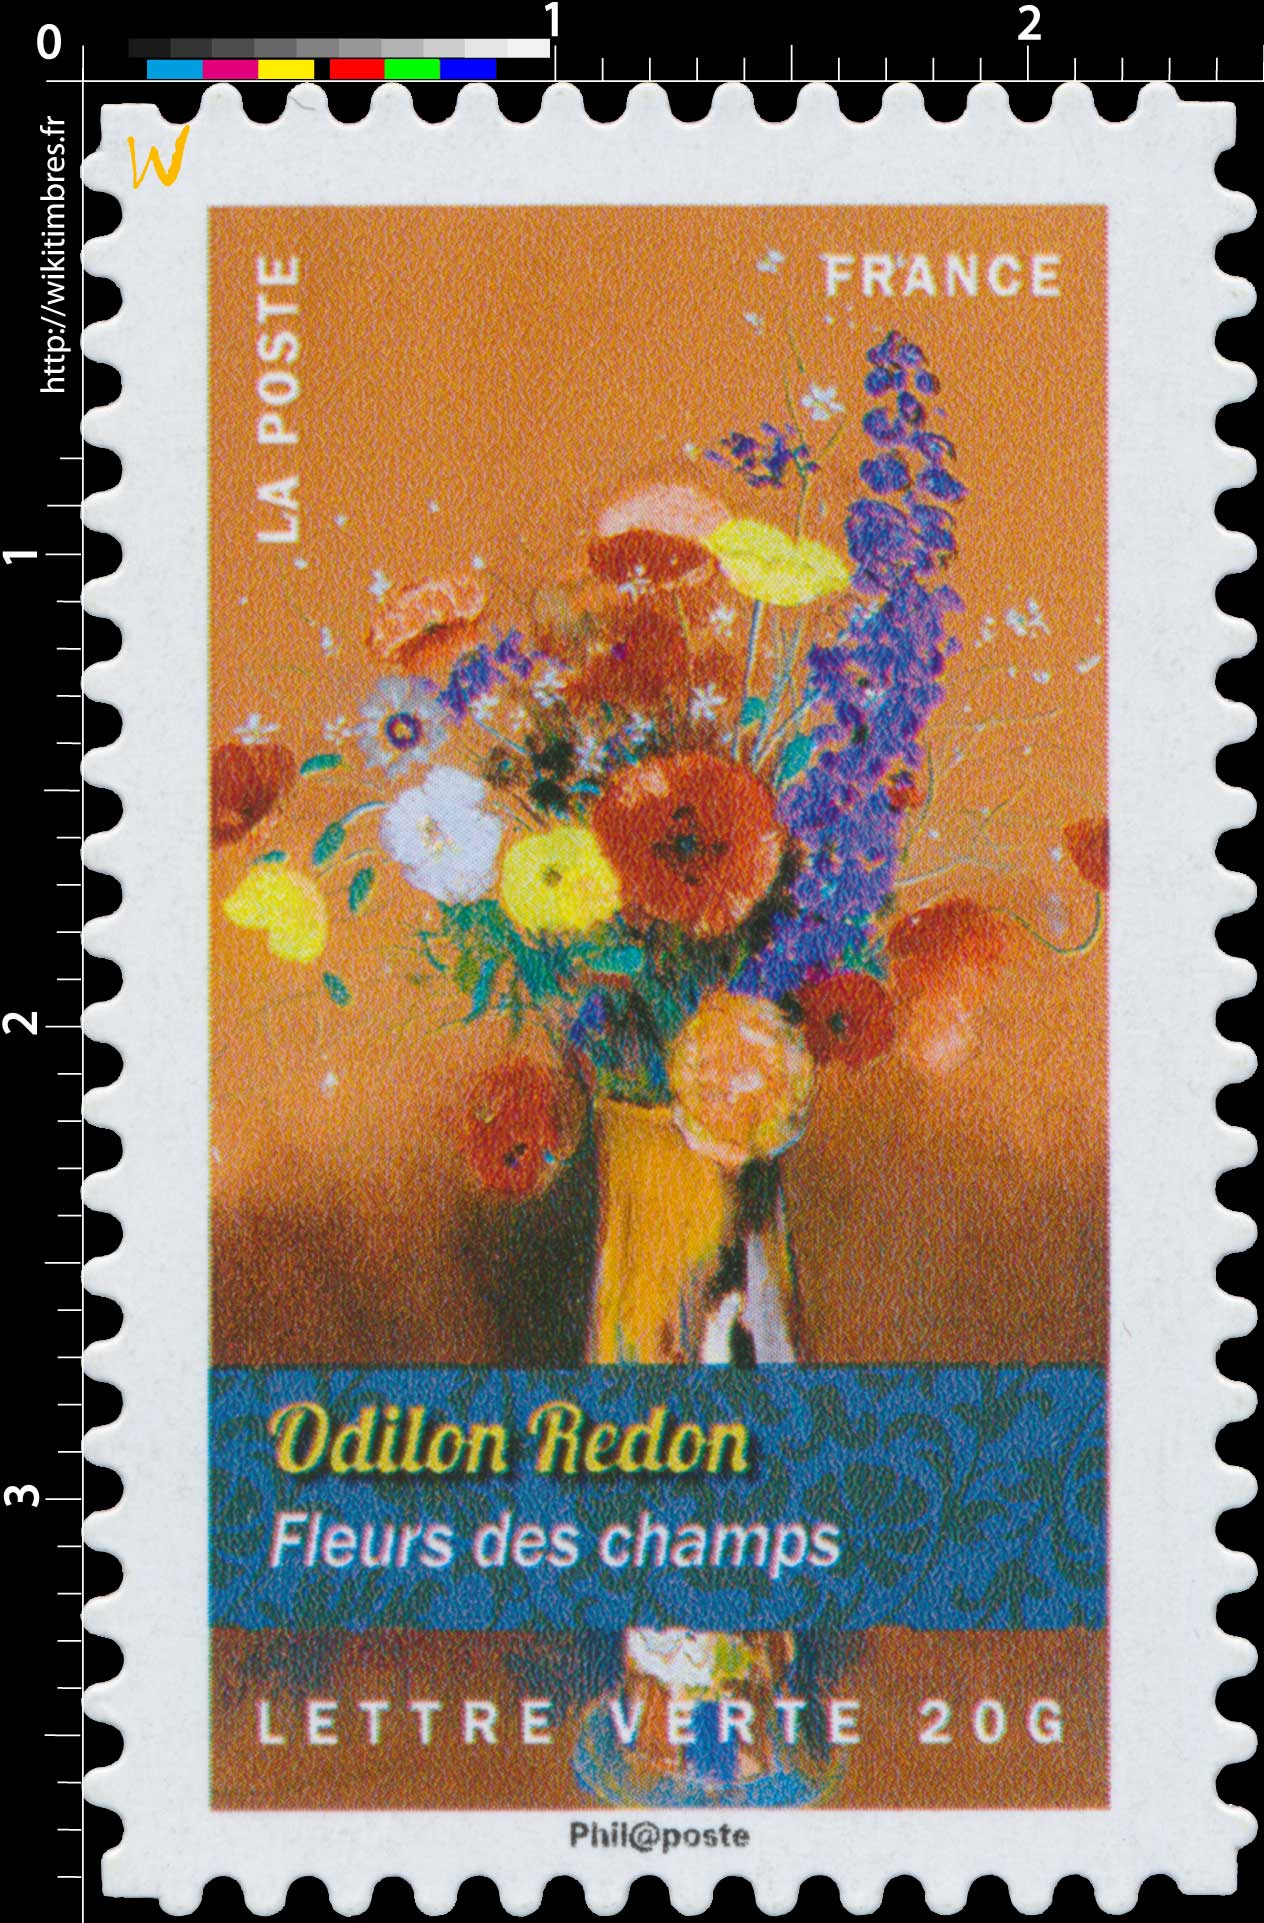 2015 Odilon Redon - Fleurs des champs